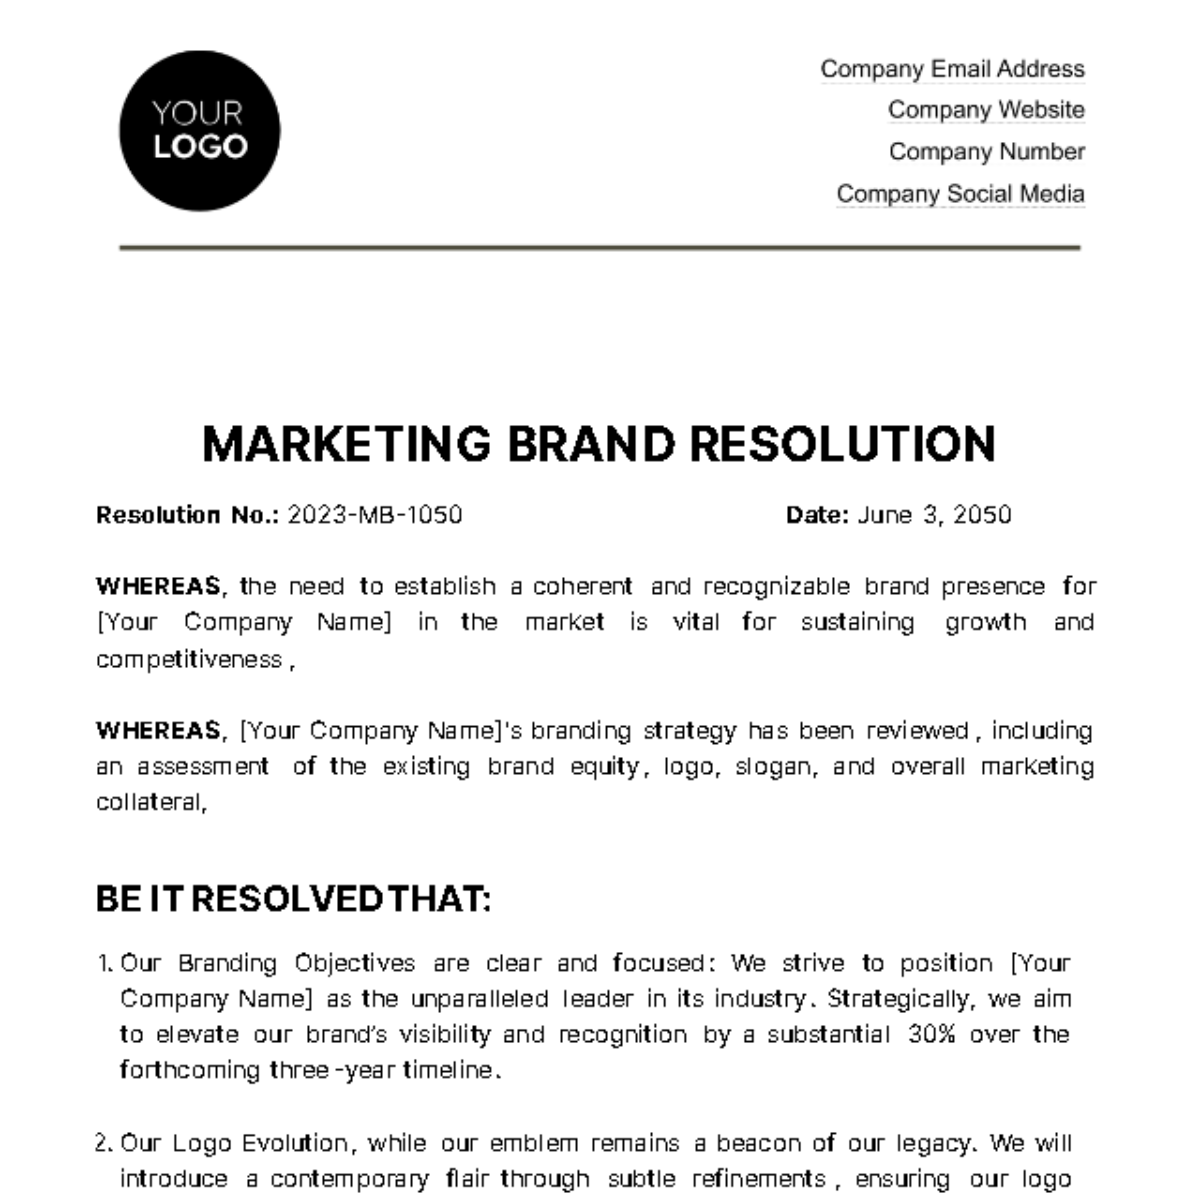 Marketing Brand Resolution Template